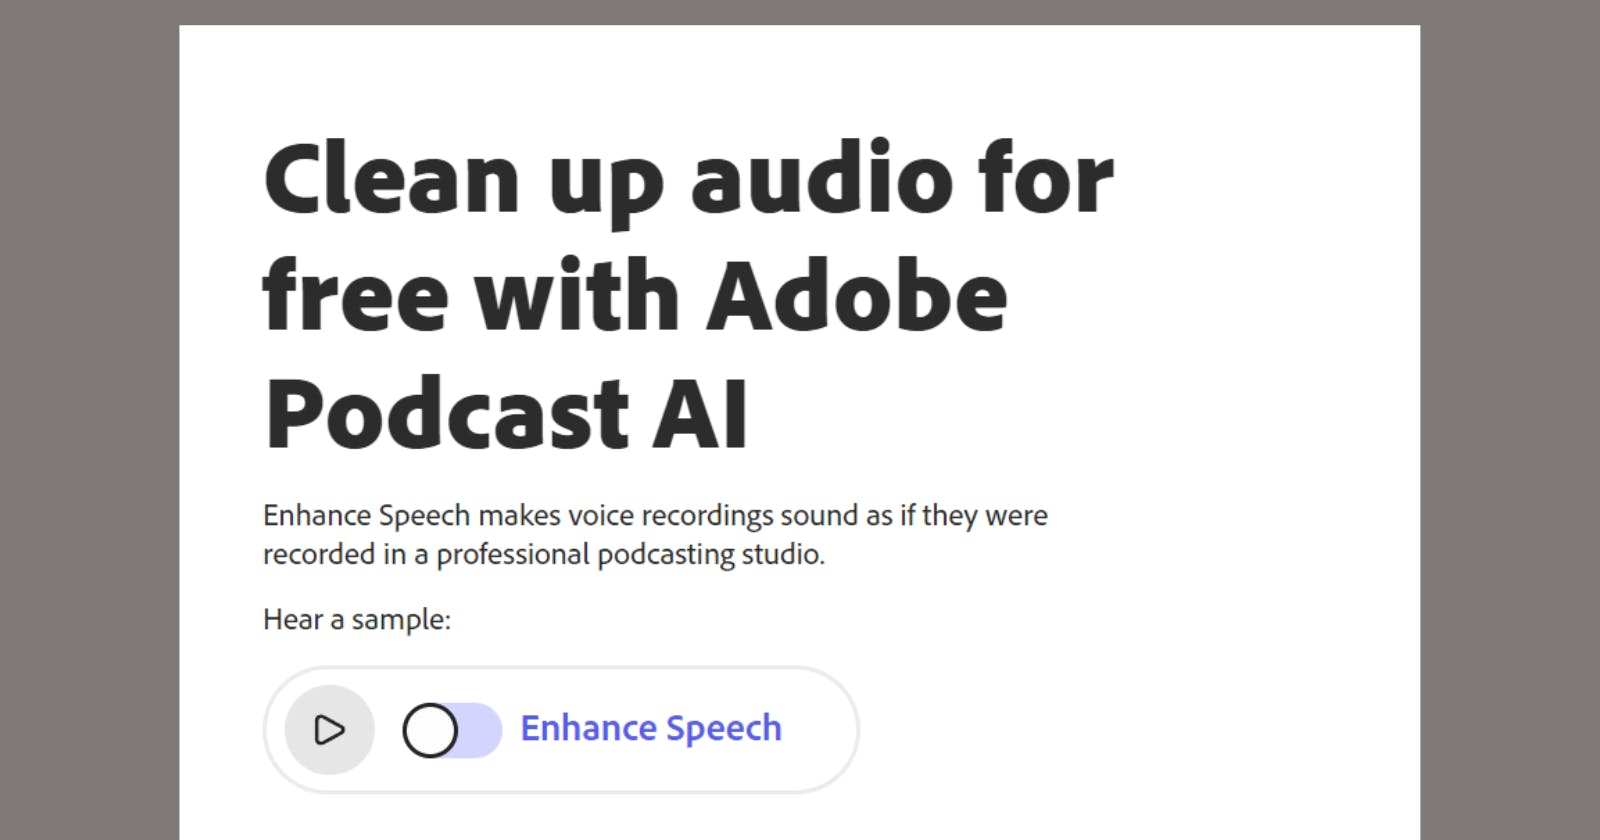 Adobe Enhance Speech - Clean up audio for free